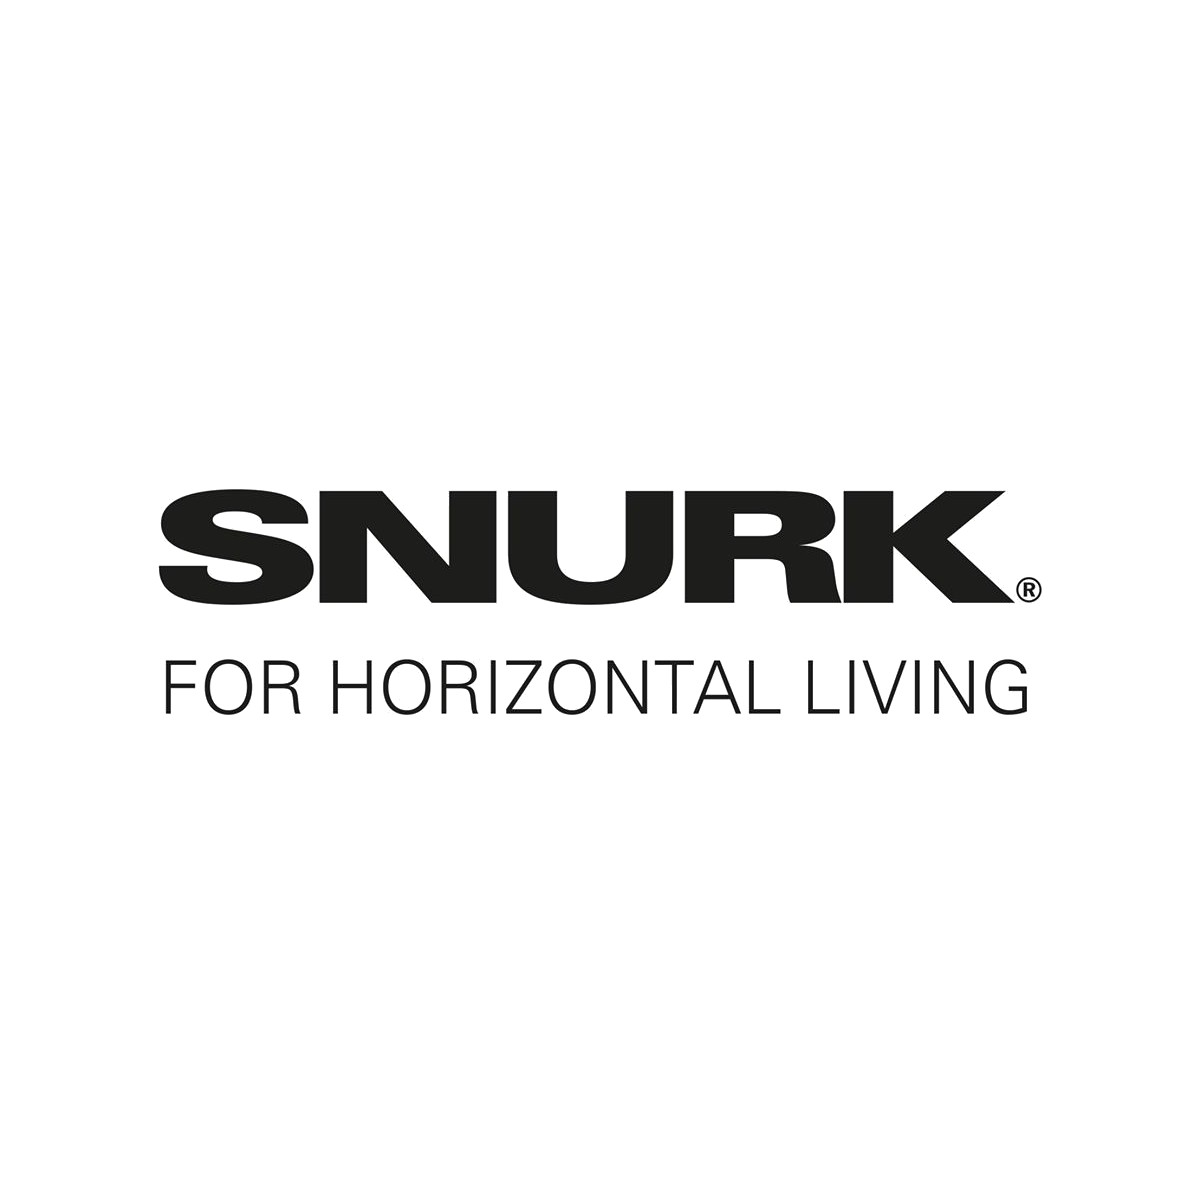 SNURK-logo